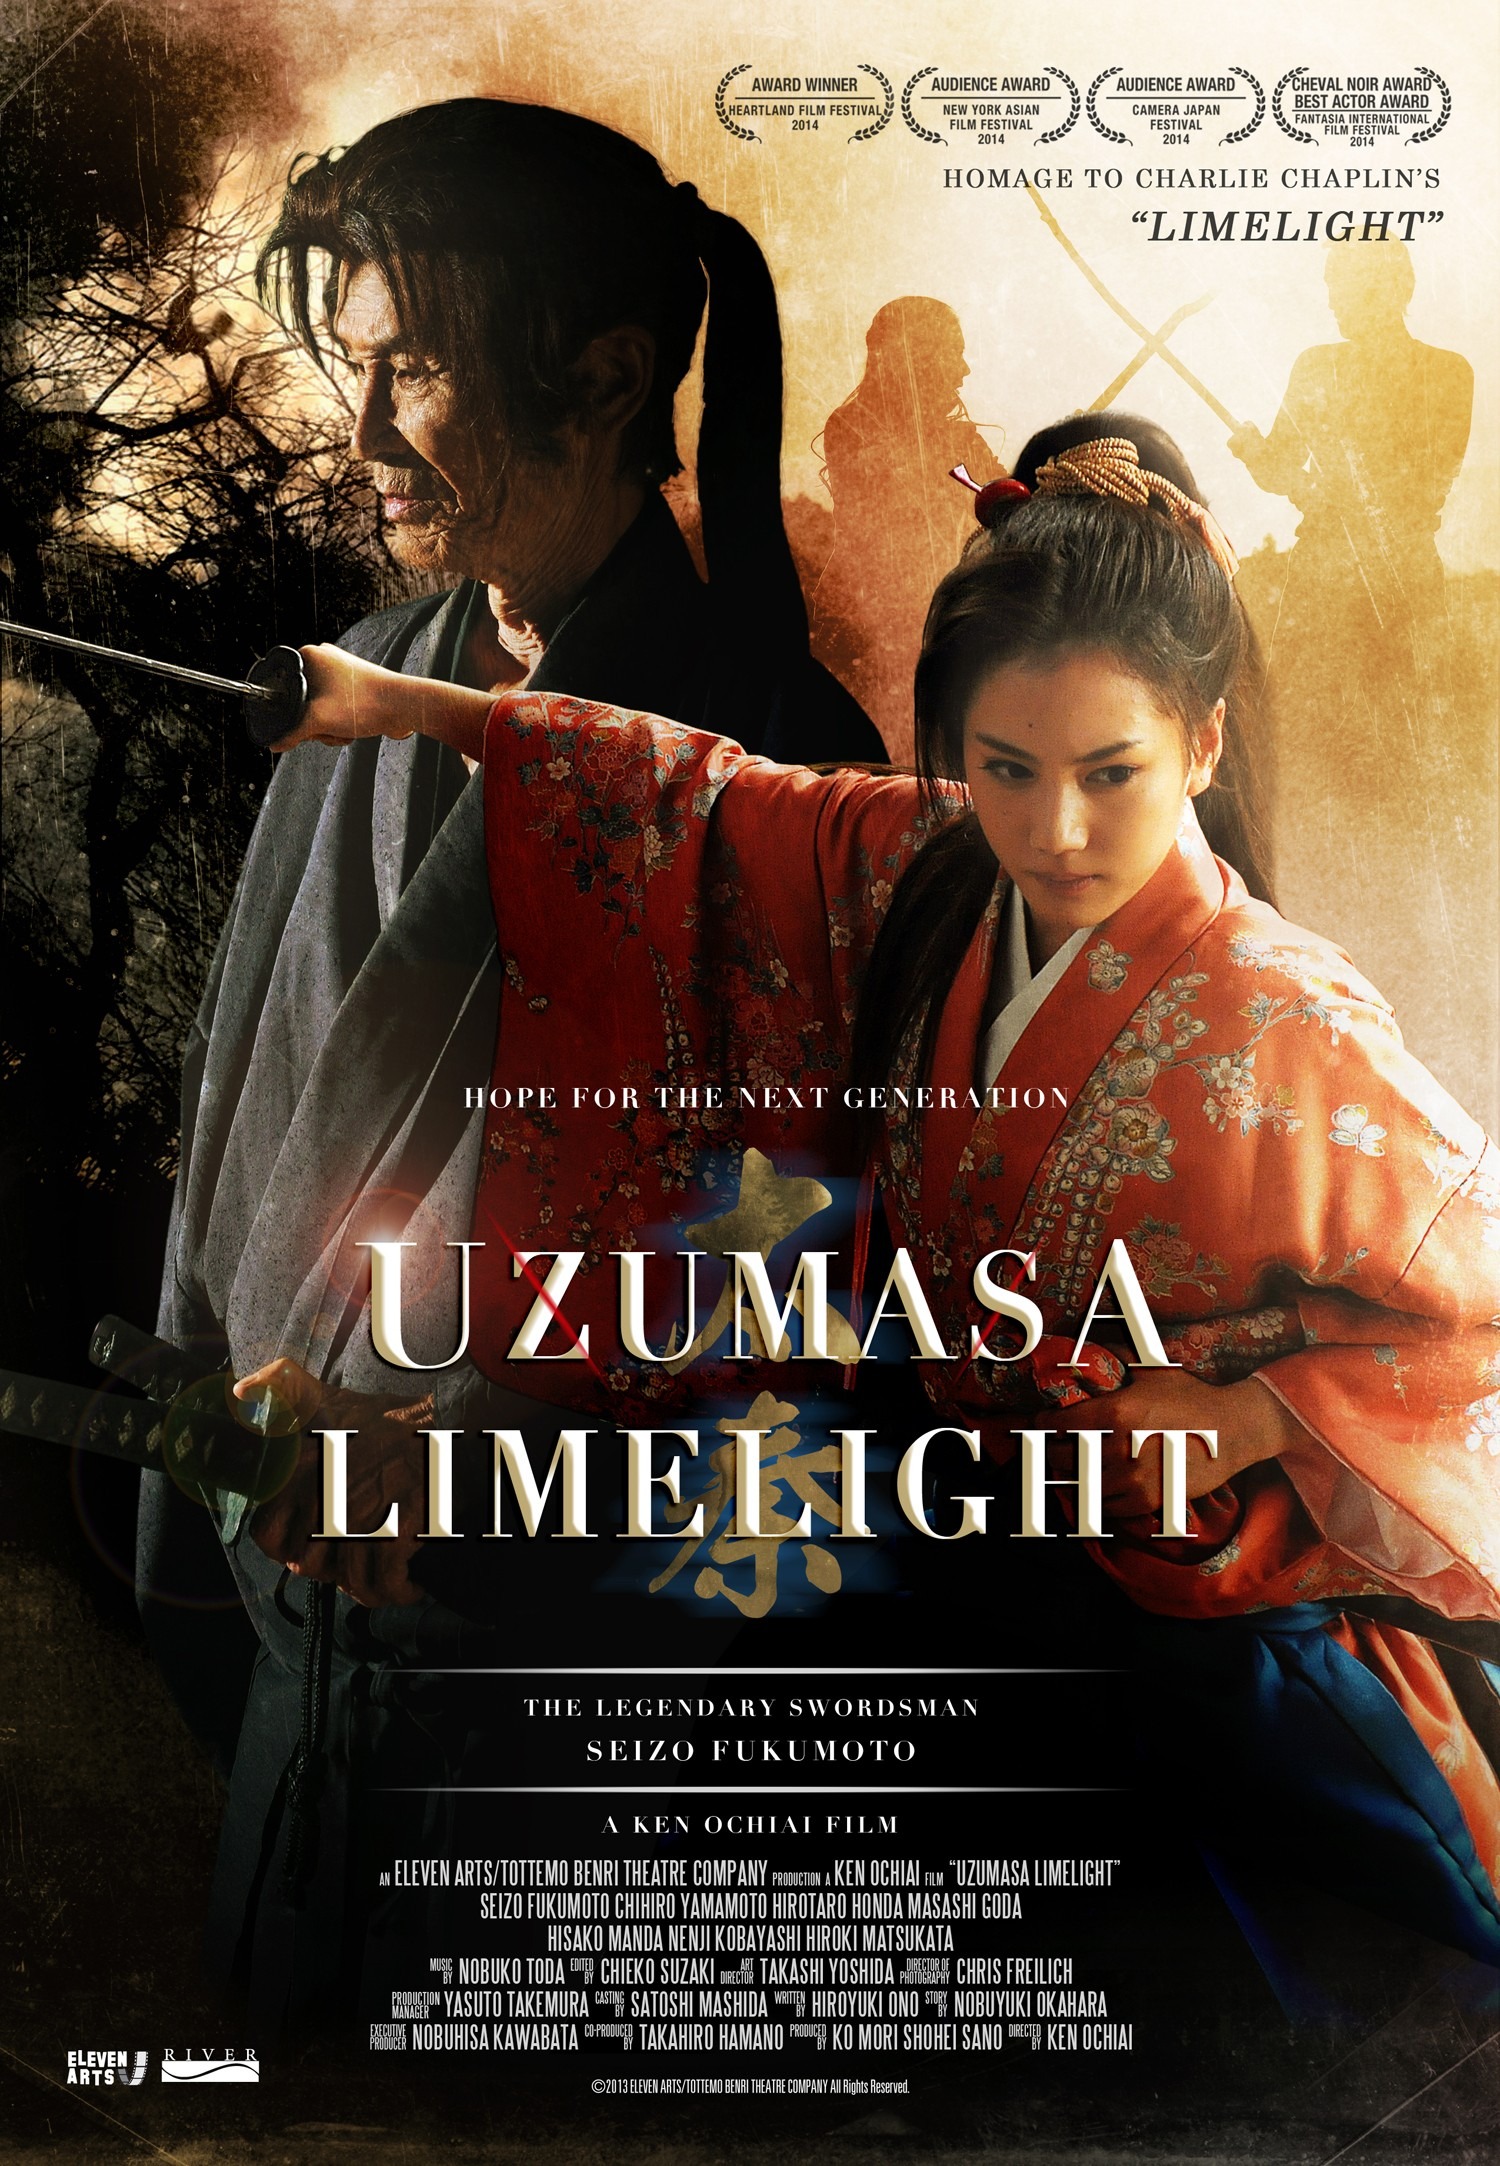 Mega Sized Movie Poster Image for Uzumasa raimuraito (#2 of 2)